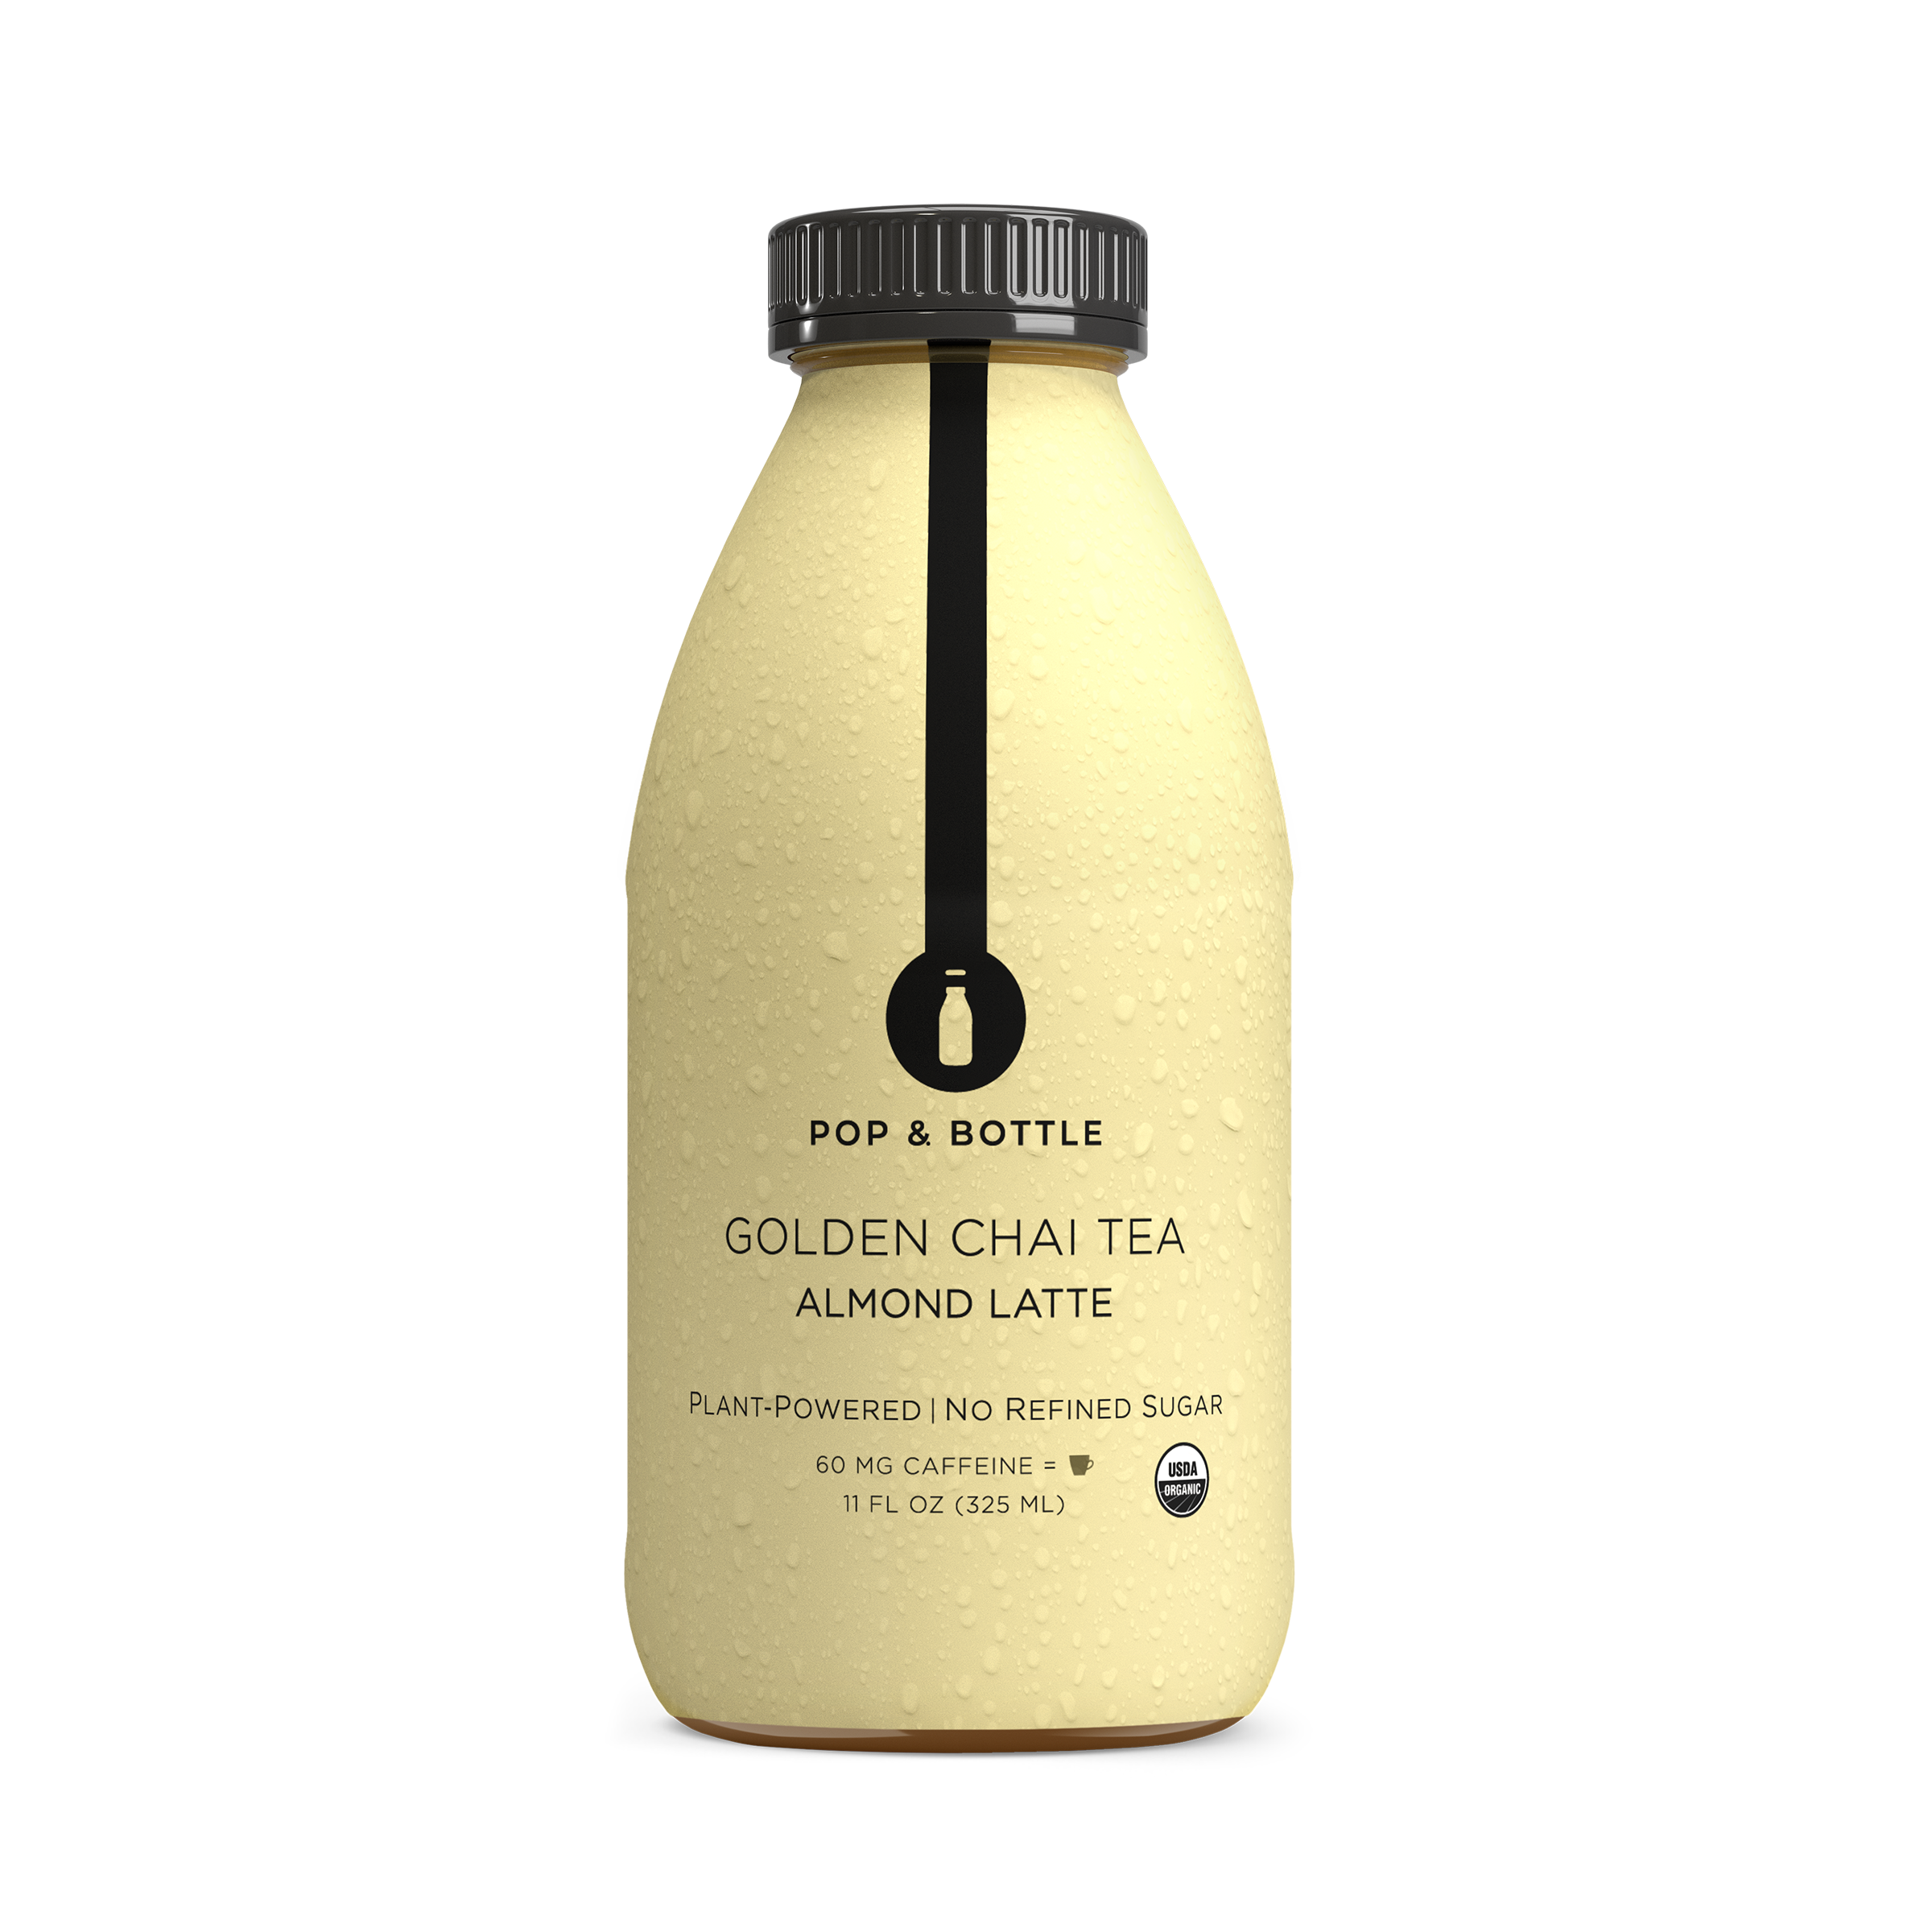 Pop & Bottle Golden Chai Tea Almond Latte Reviews